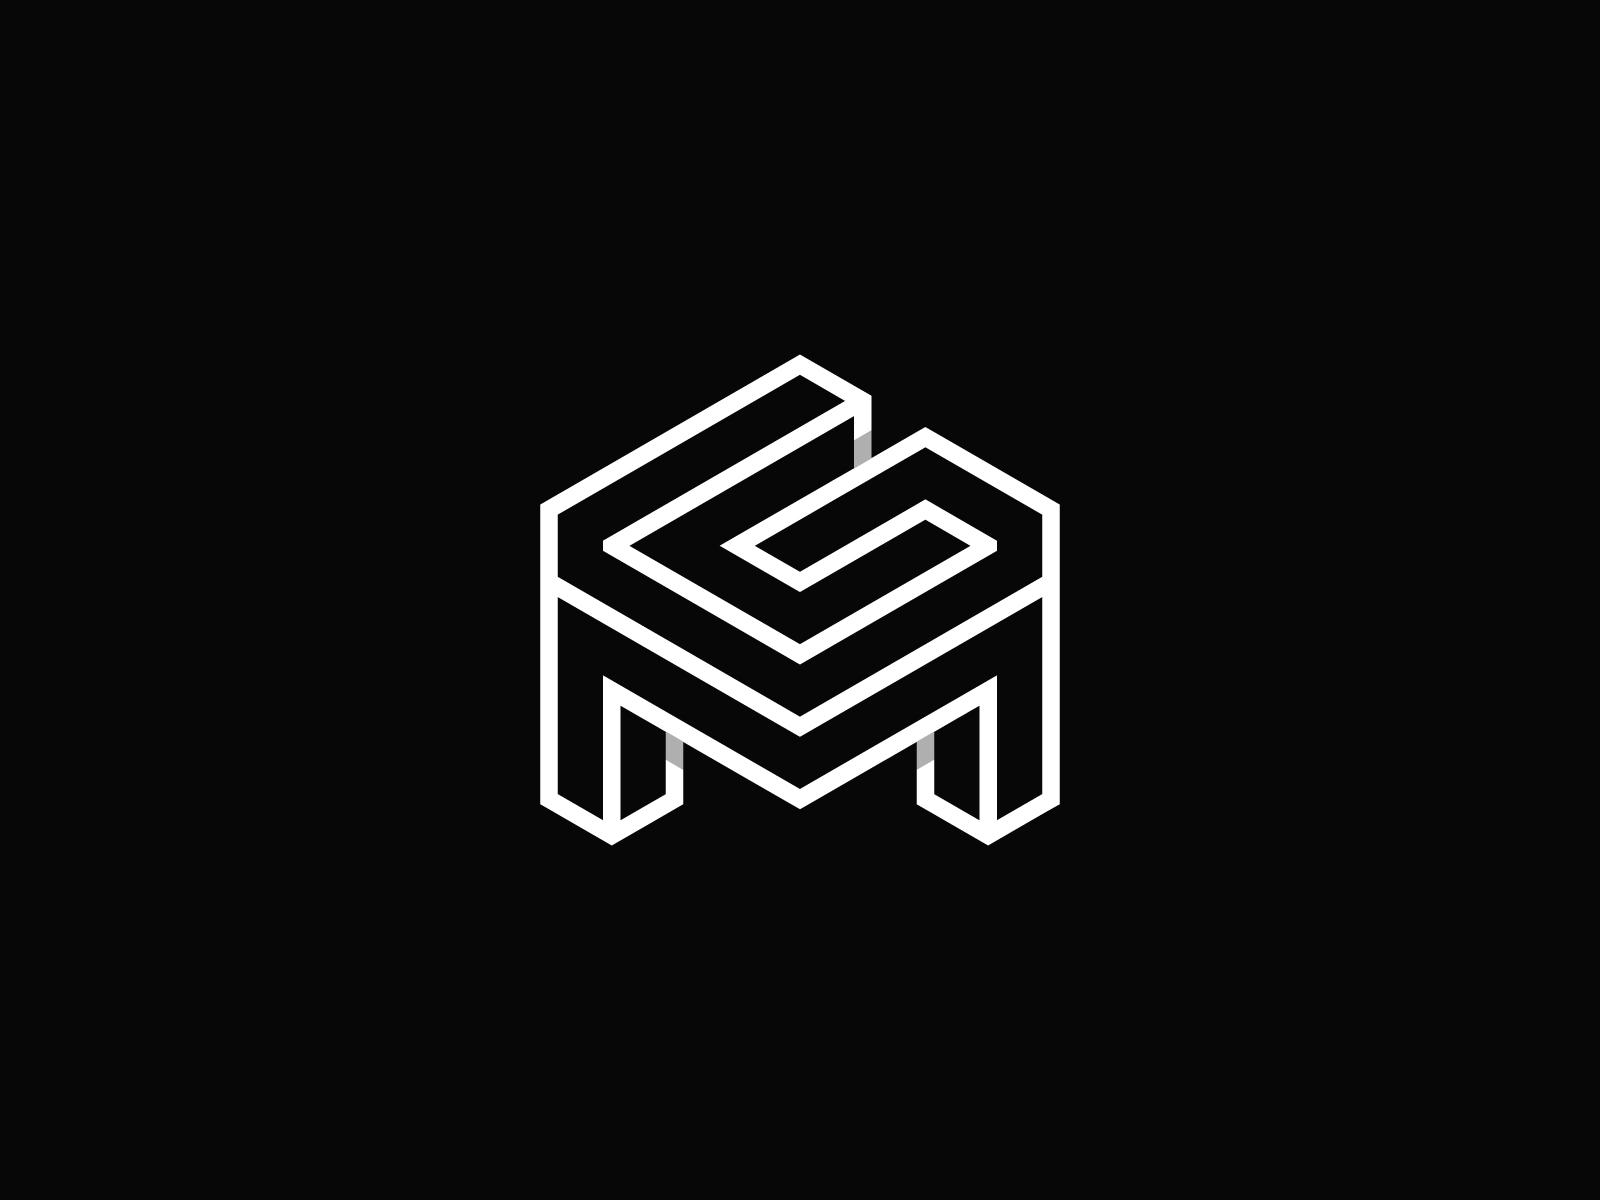 Elegant mg letter linked monogram logo design Vector Image